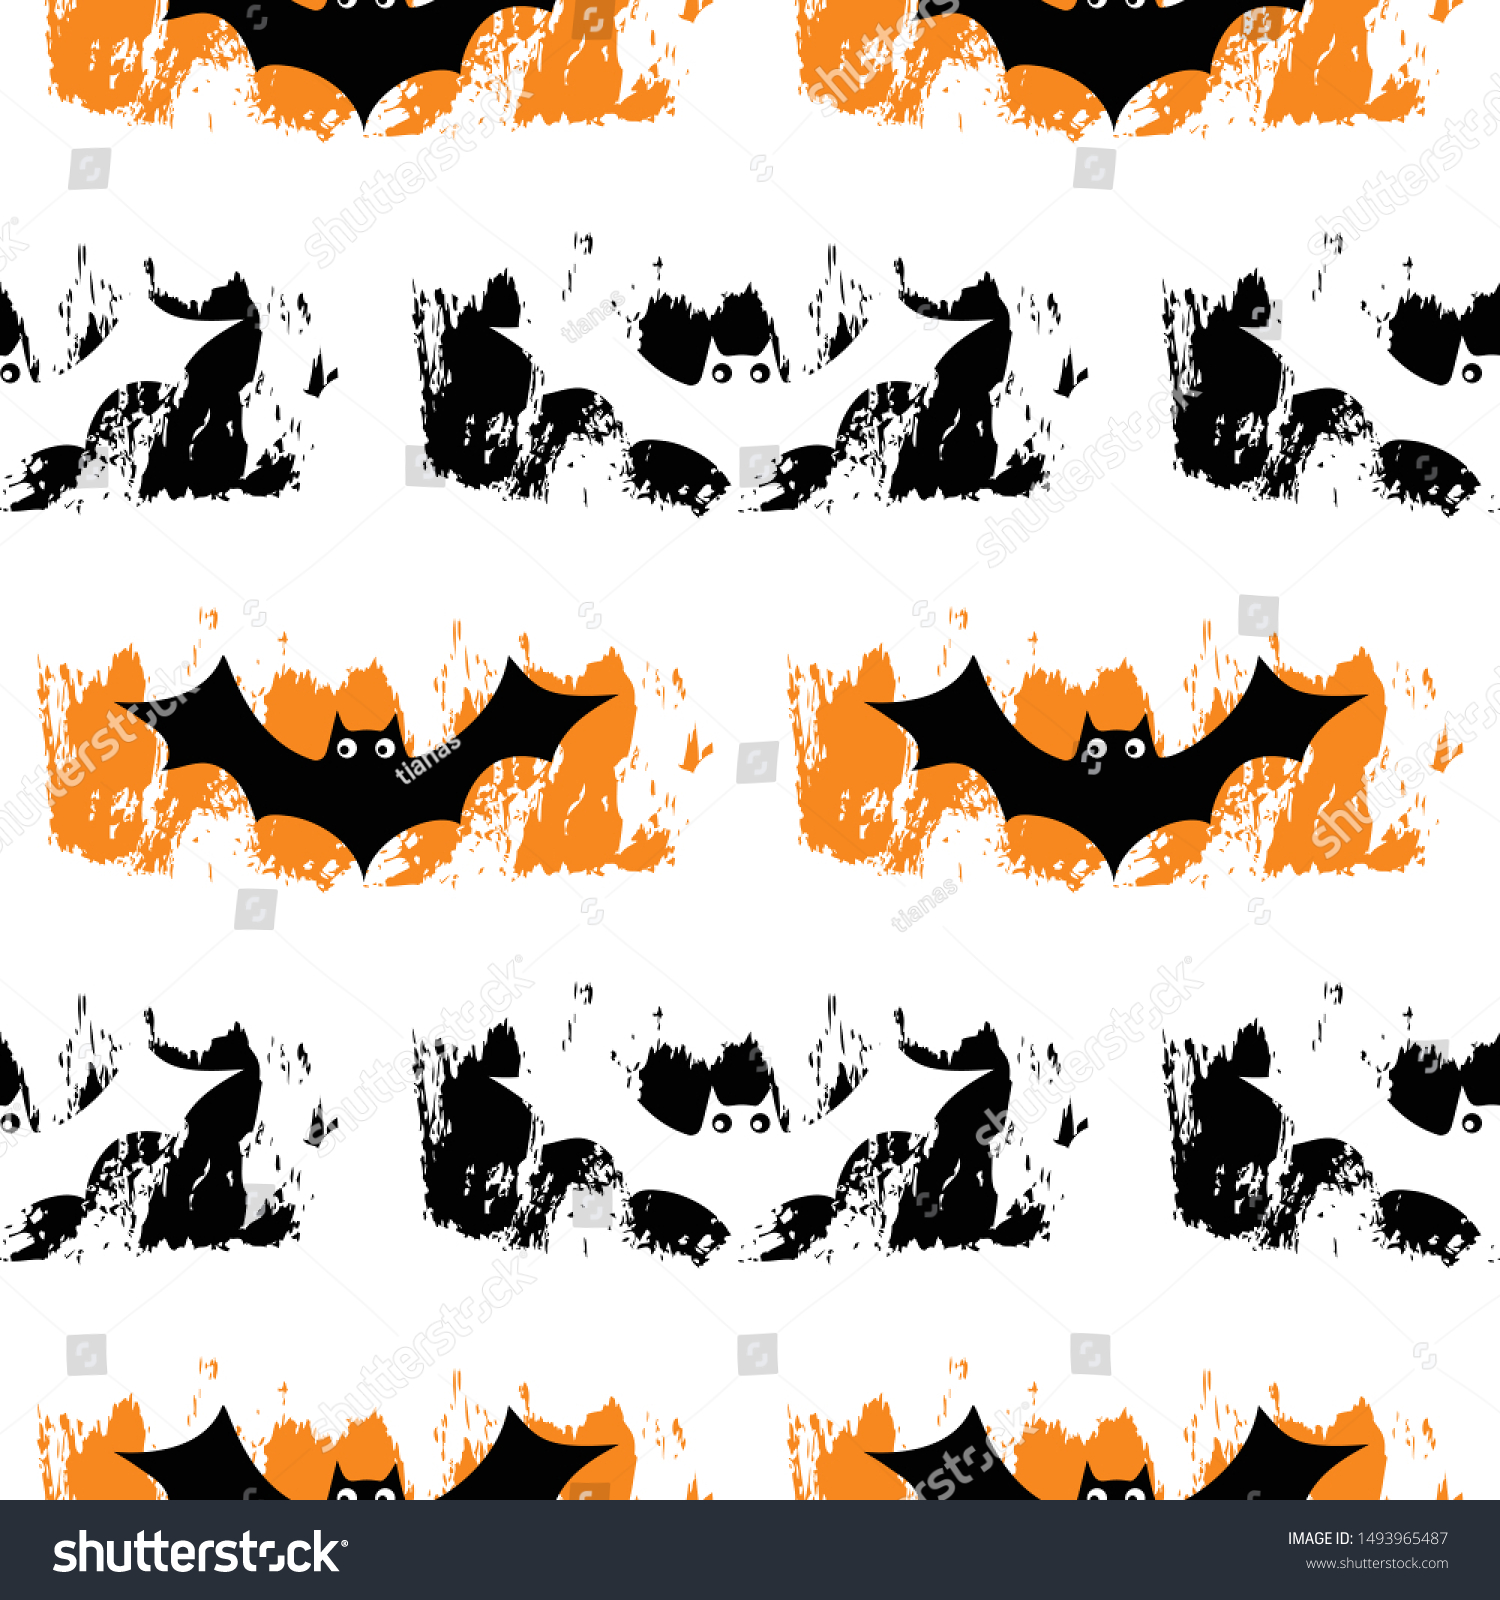 Batman Wallpapers Stock Illustrations Images Vectors Shutterstock Images, Photos, Reviews